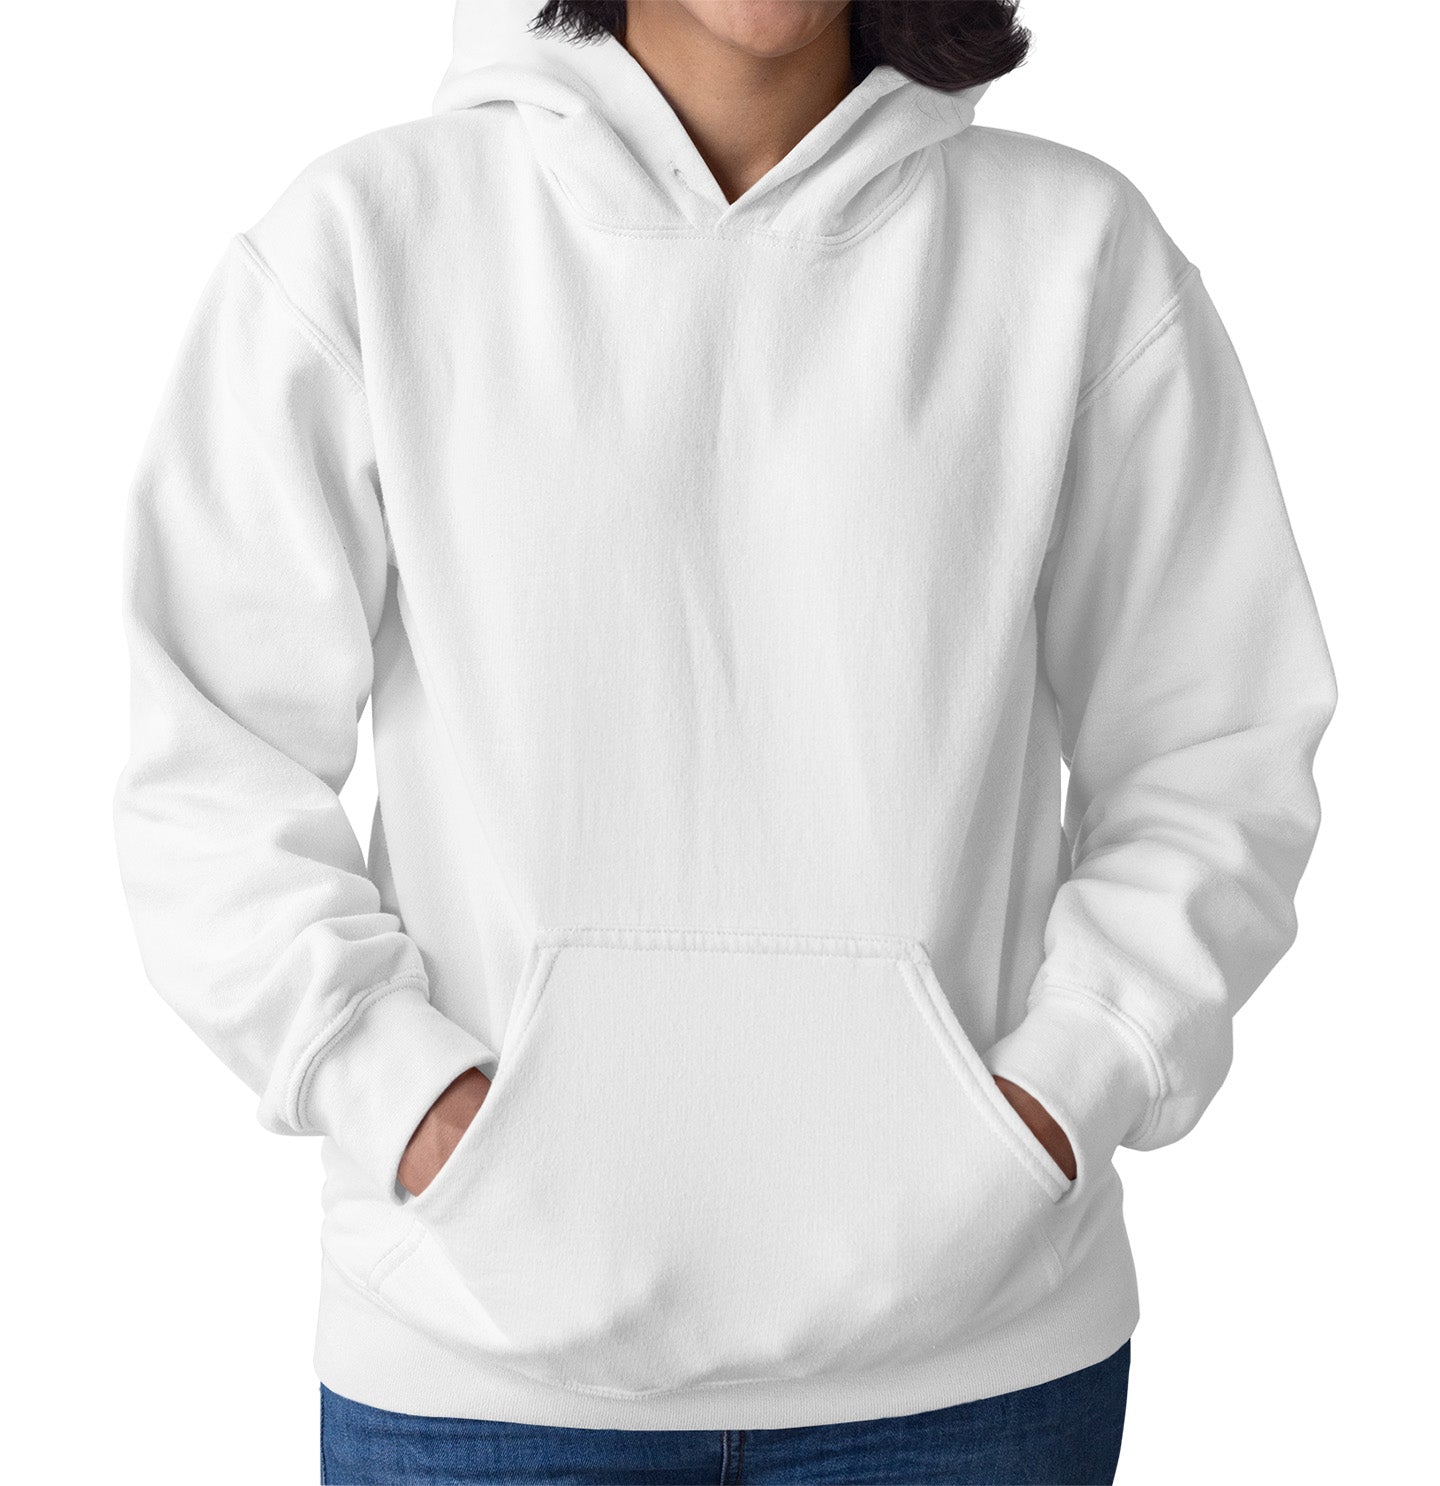 Golden Mom Illustration - Personalized Custom Adult Unisex Hoodie Sweatshirt